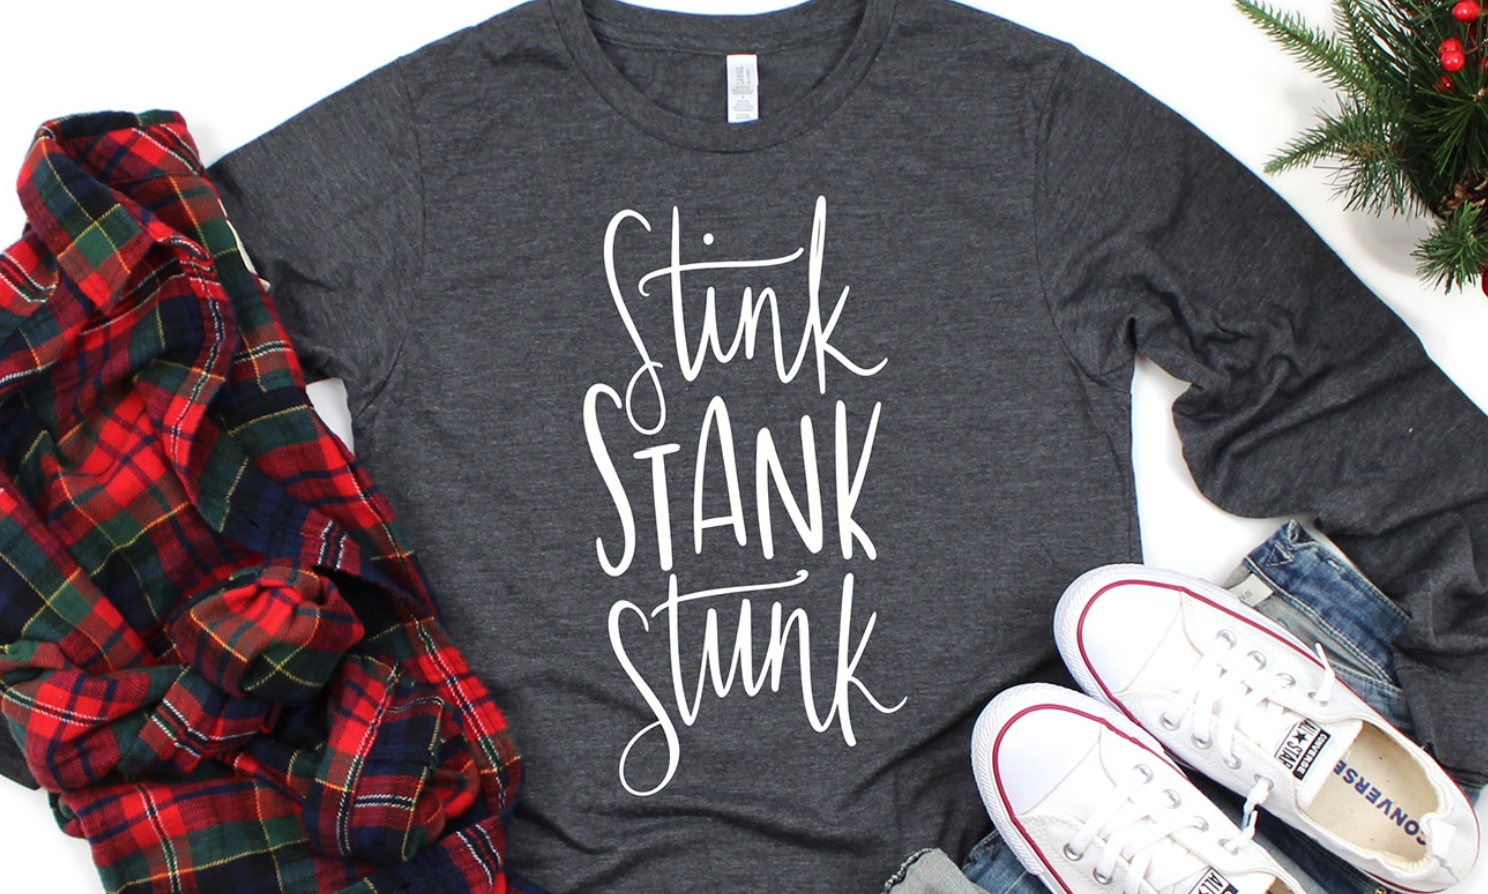 free stink stank stunk grinch shirt svg